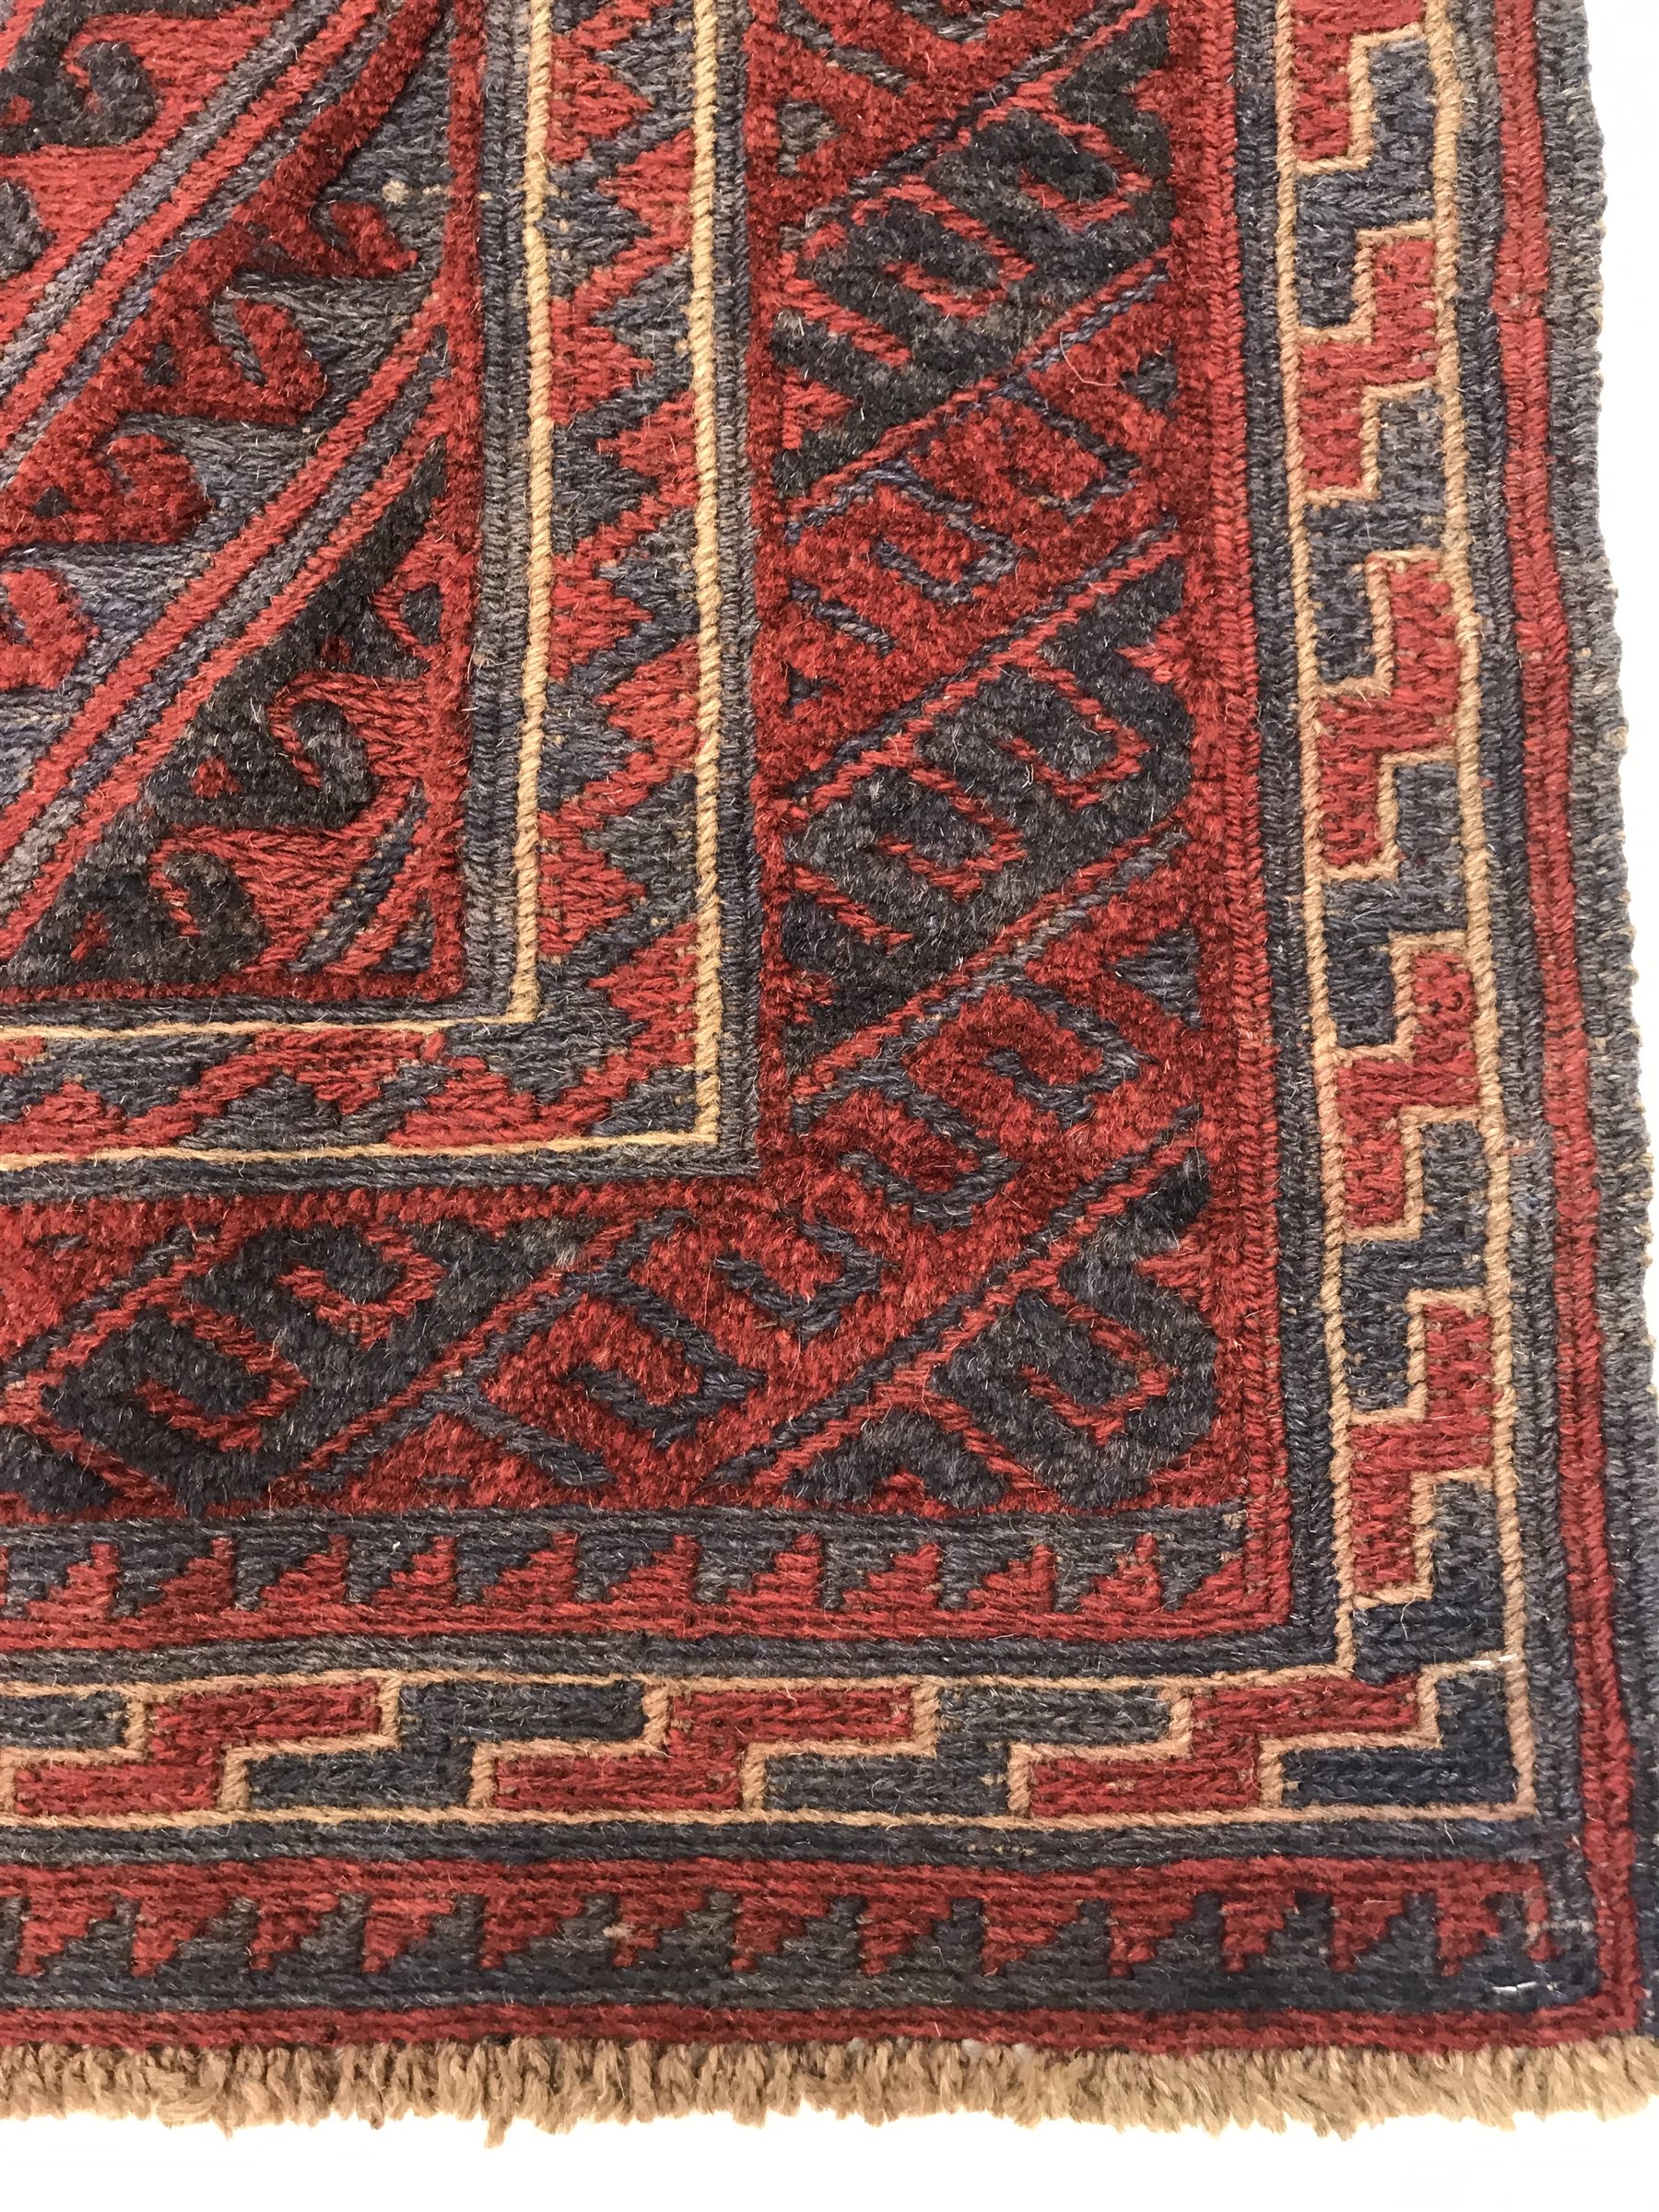 Gazak red and blue ground rug, central medallion, 120cm x 114cm - Image 3 of 6